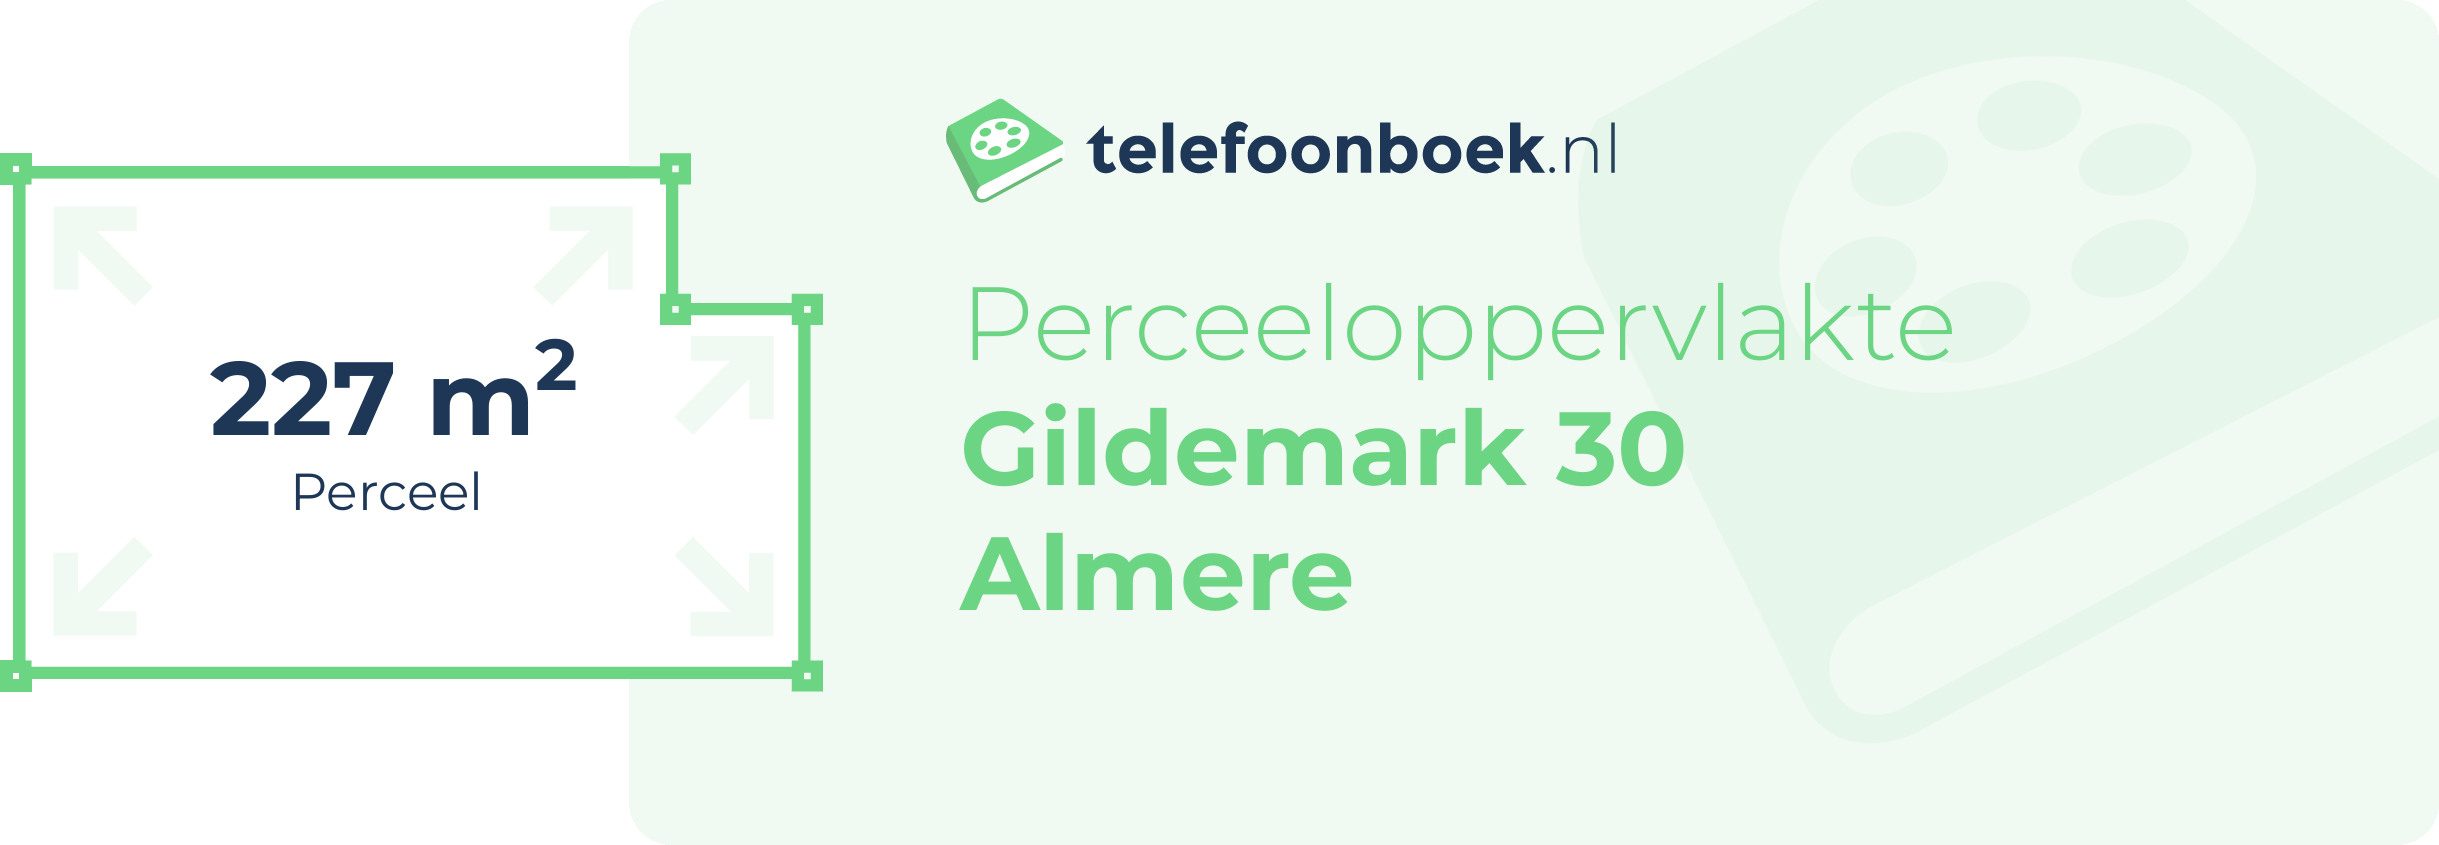 Perceeloppervlakte Gildemark 30 Almere